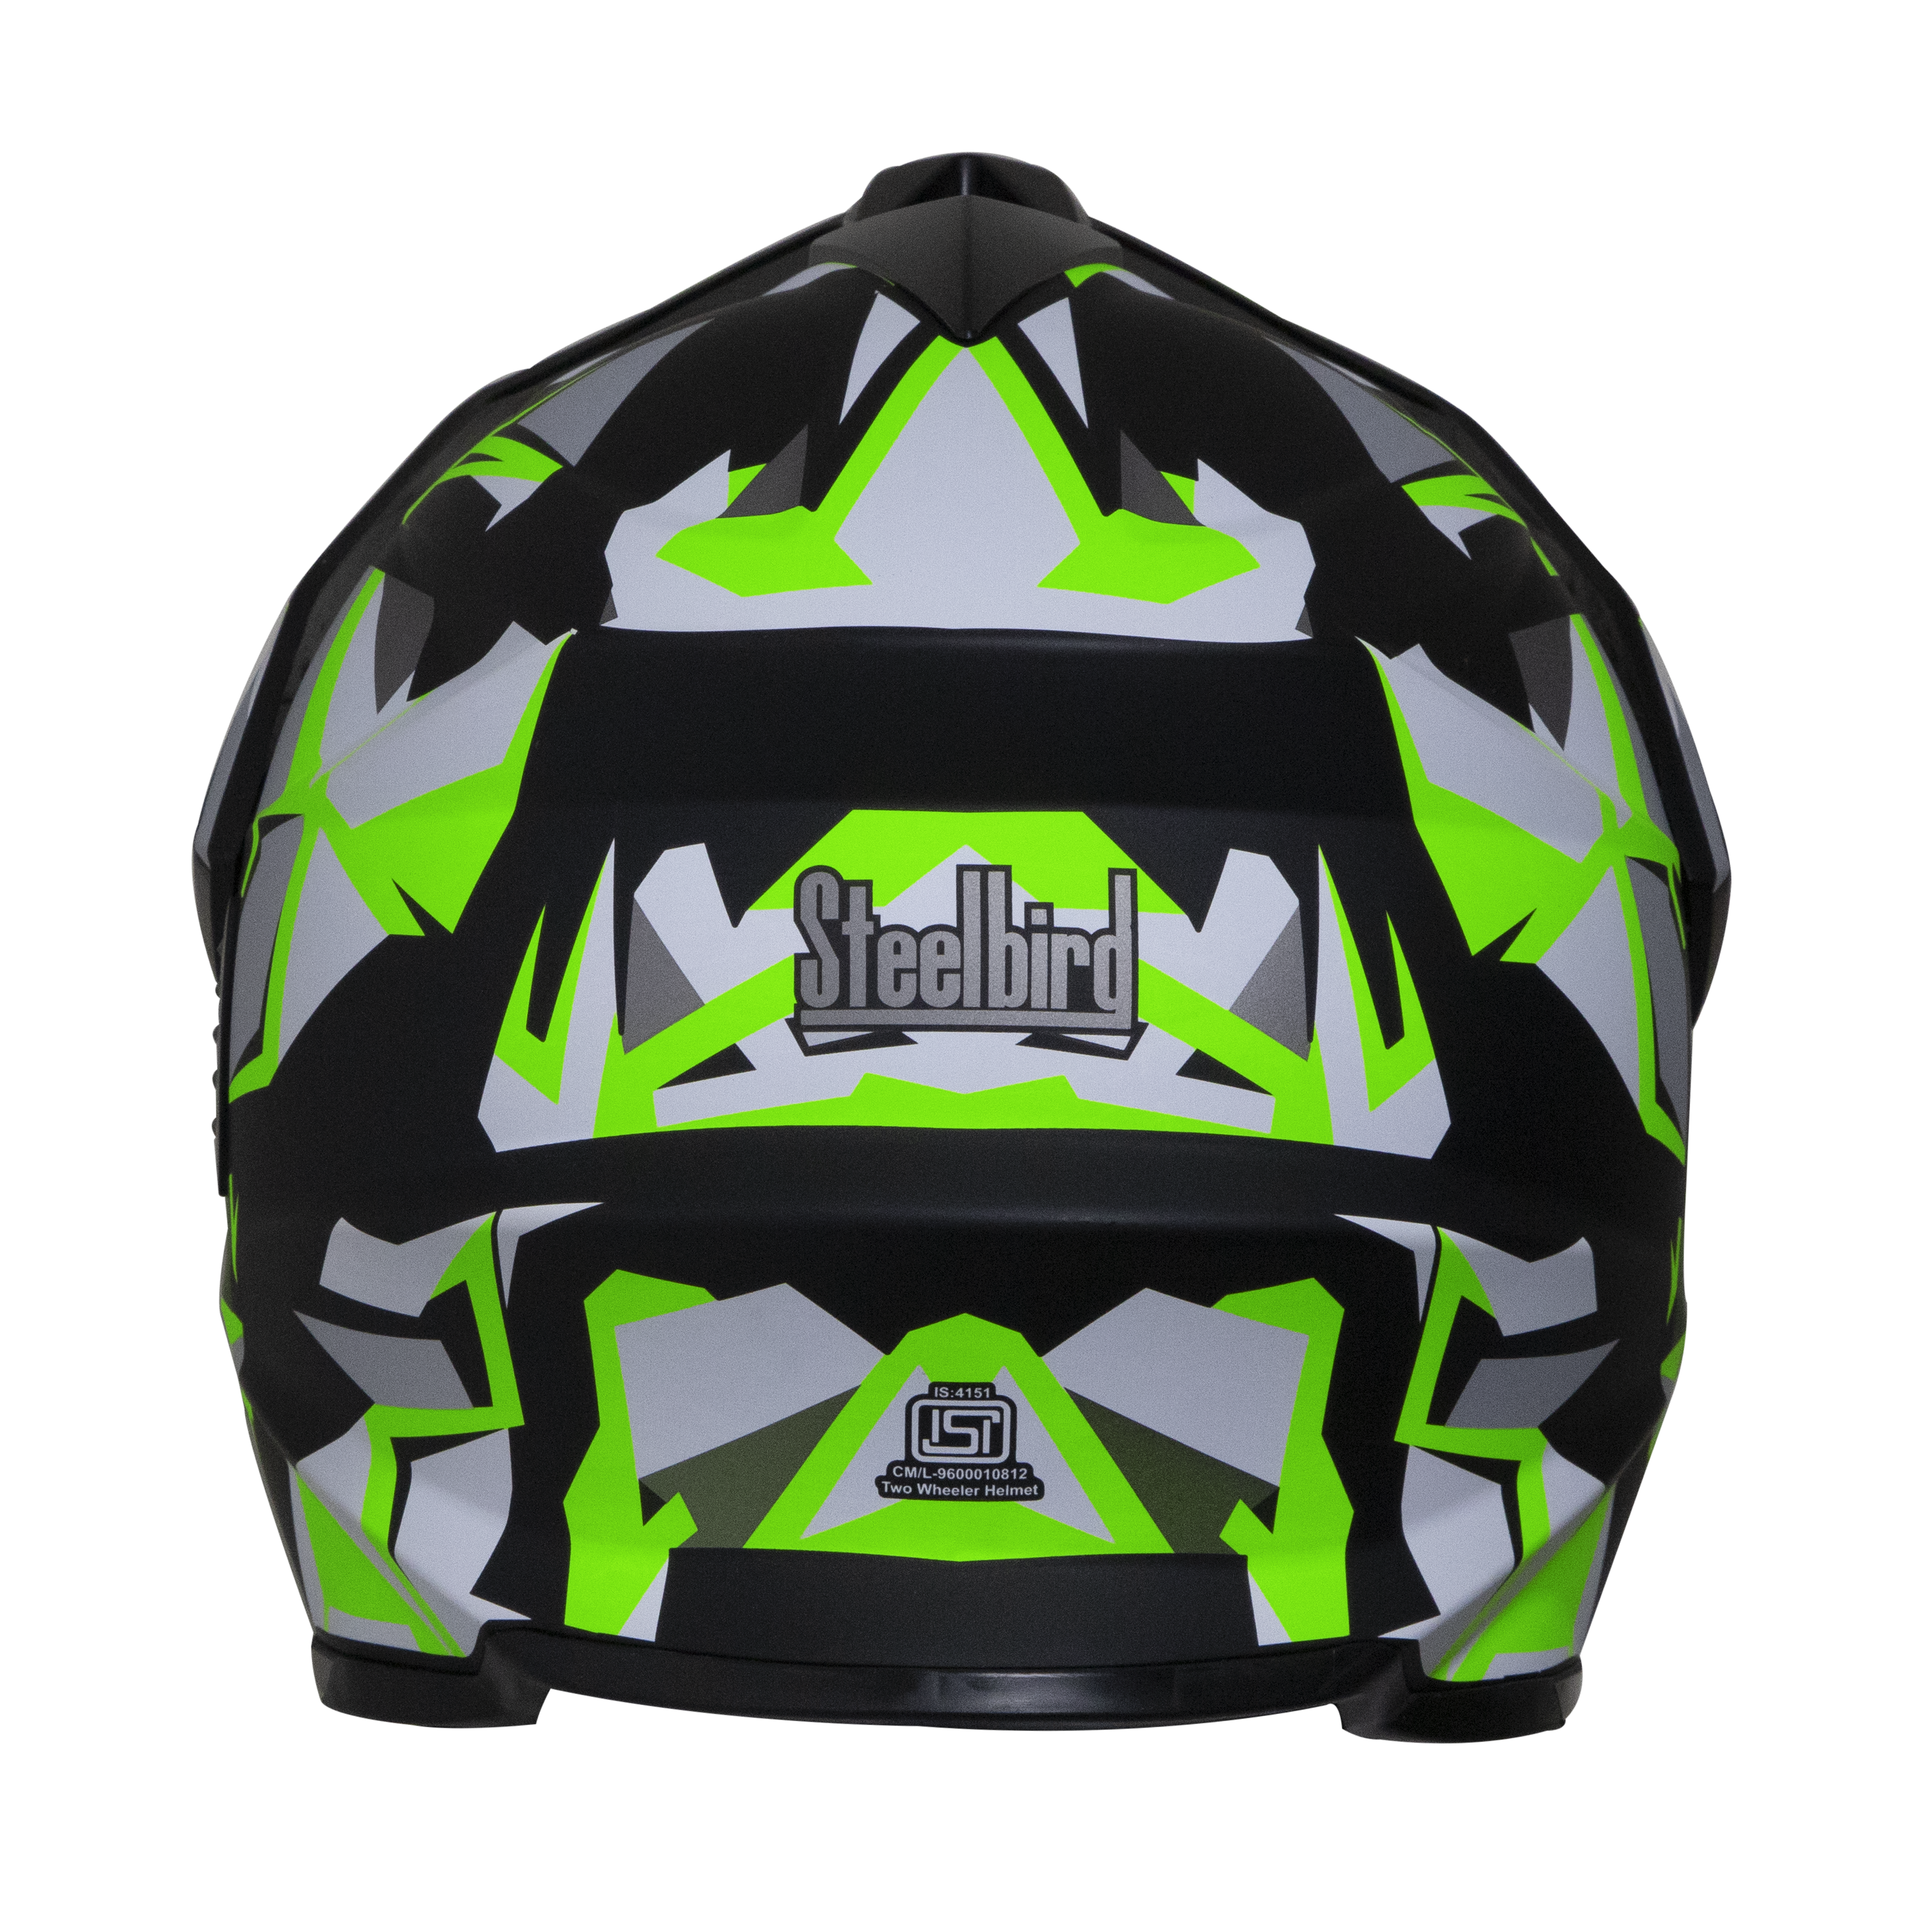 Steelbird Off Road Bang KTN ISI Certified ABS Material Shell Motocross Helmet (Matt Black Neon With Clear Visor)